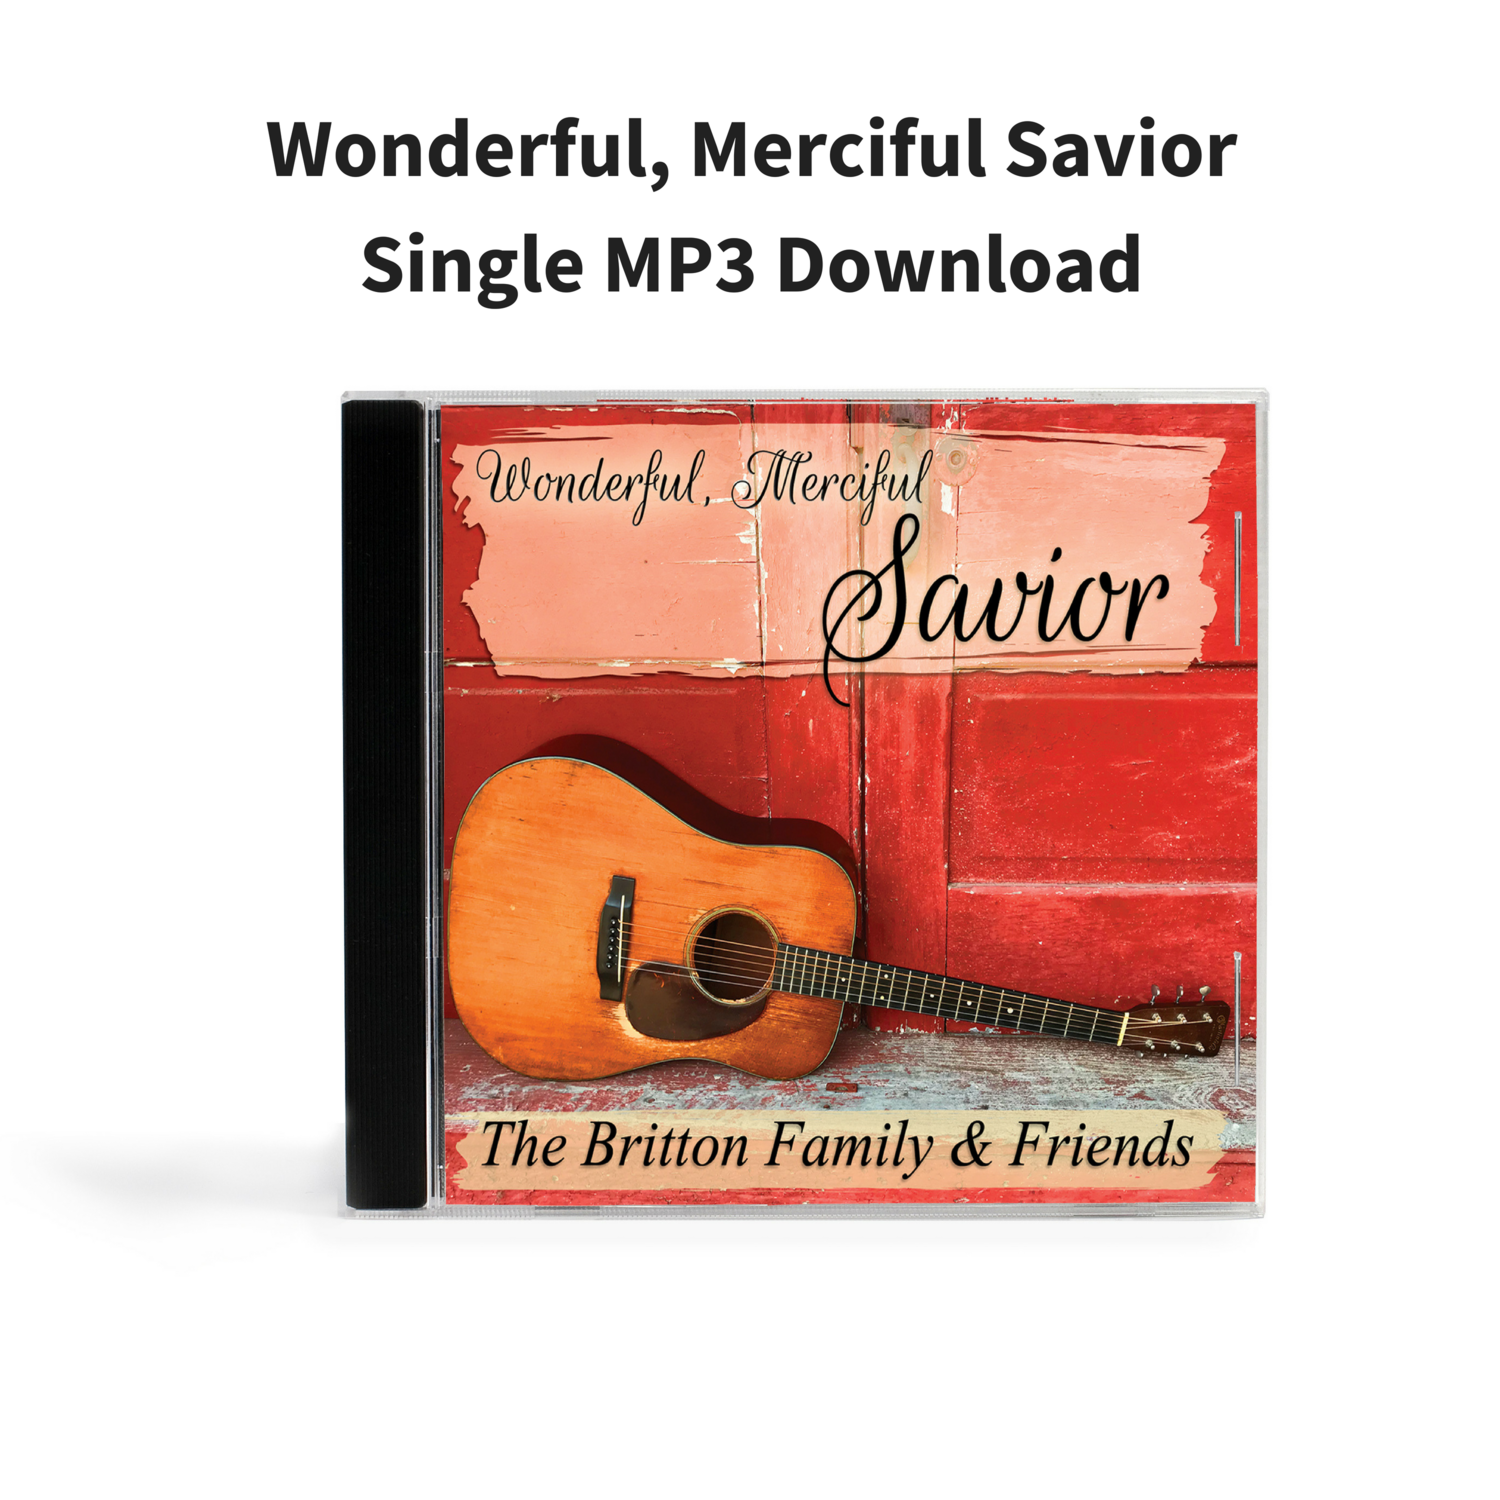 Wonderful, Merciful Savior - Single MP3 Download